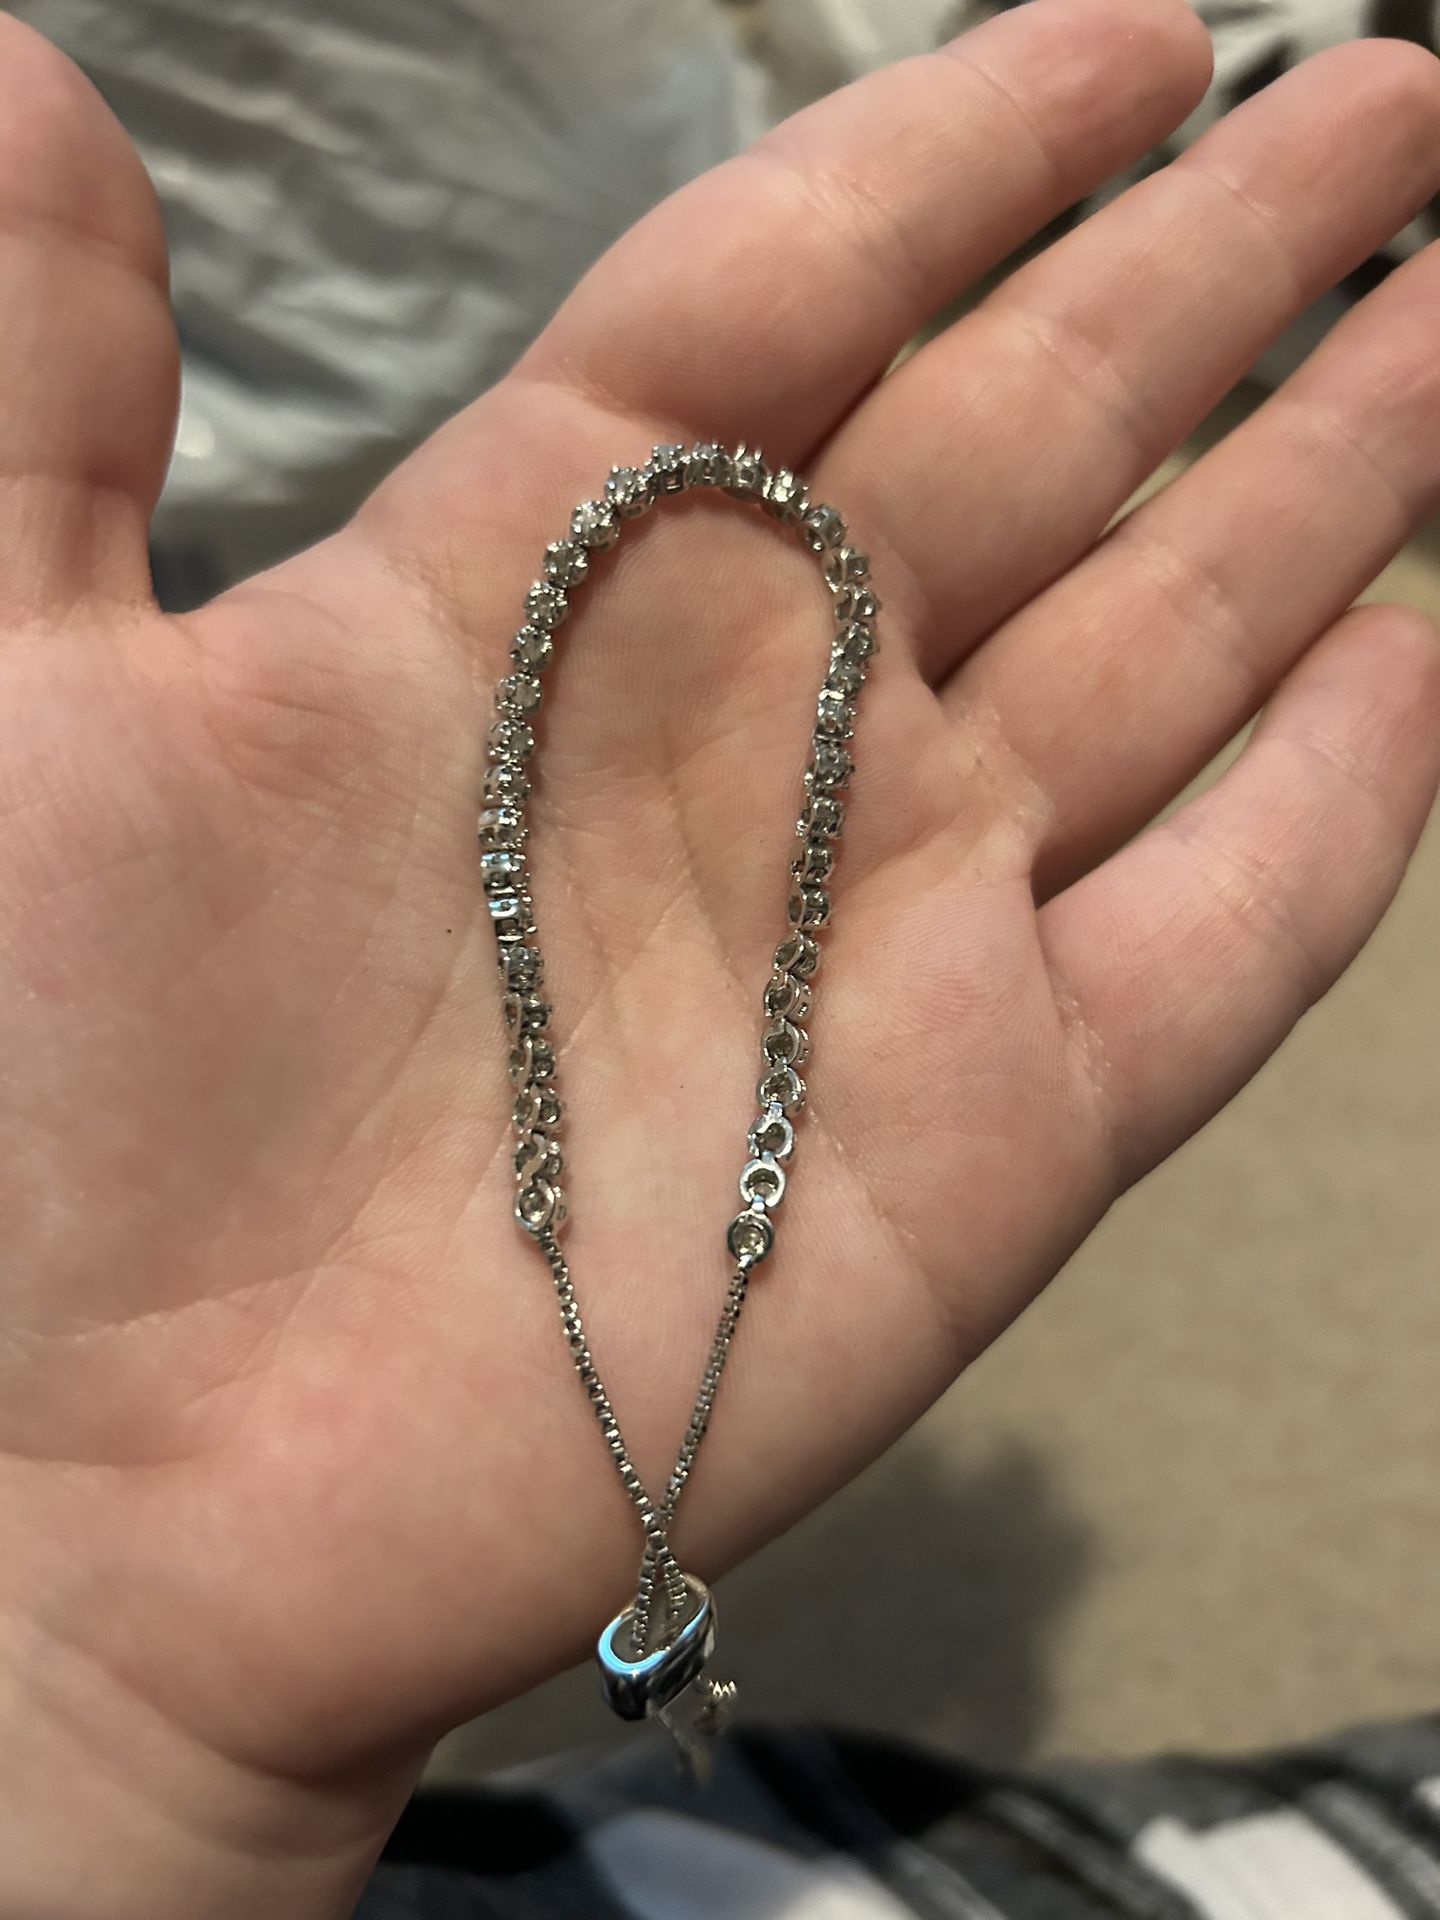 Diamond Bracelet And Earrings